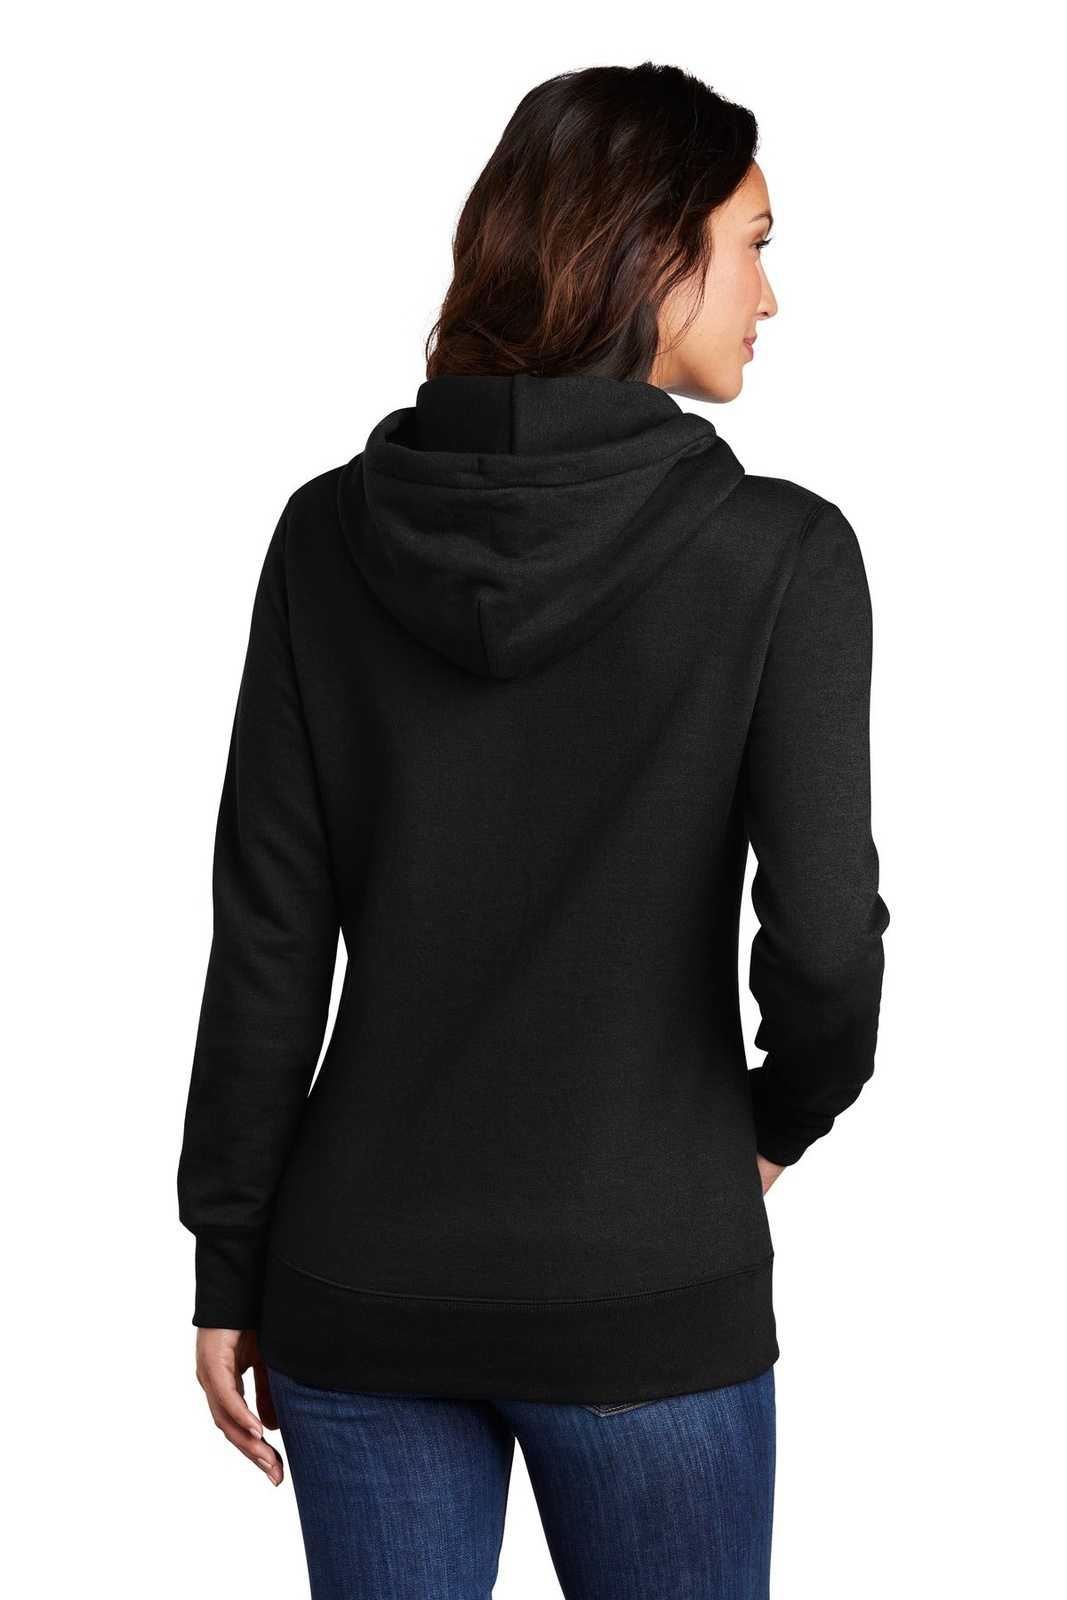 Port &amp; Company LPC78H Ladies Core Fleece Pullover Hooded Sweatshirt - Jet Black - HIT a Double - 2